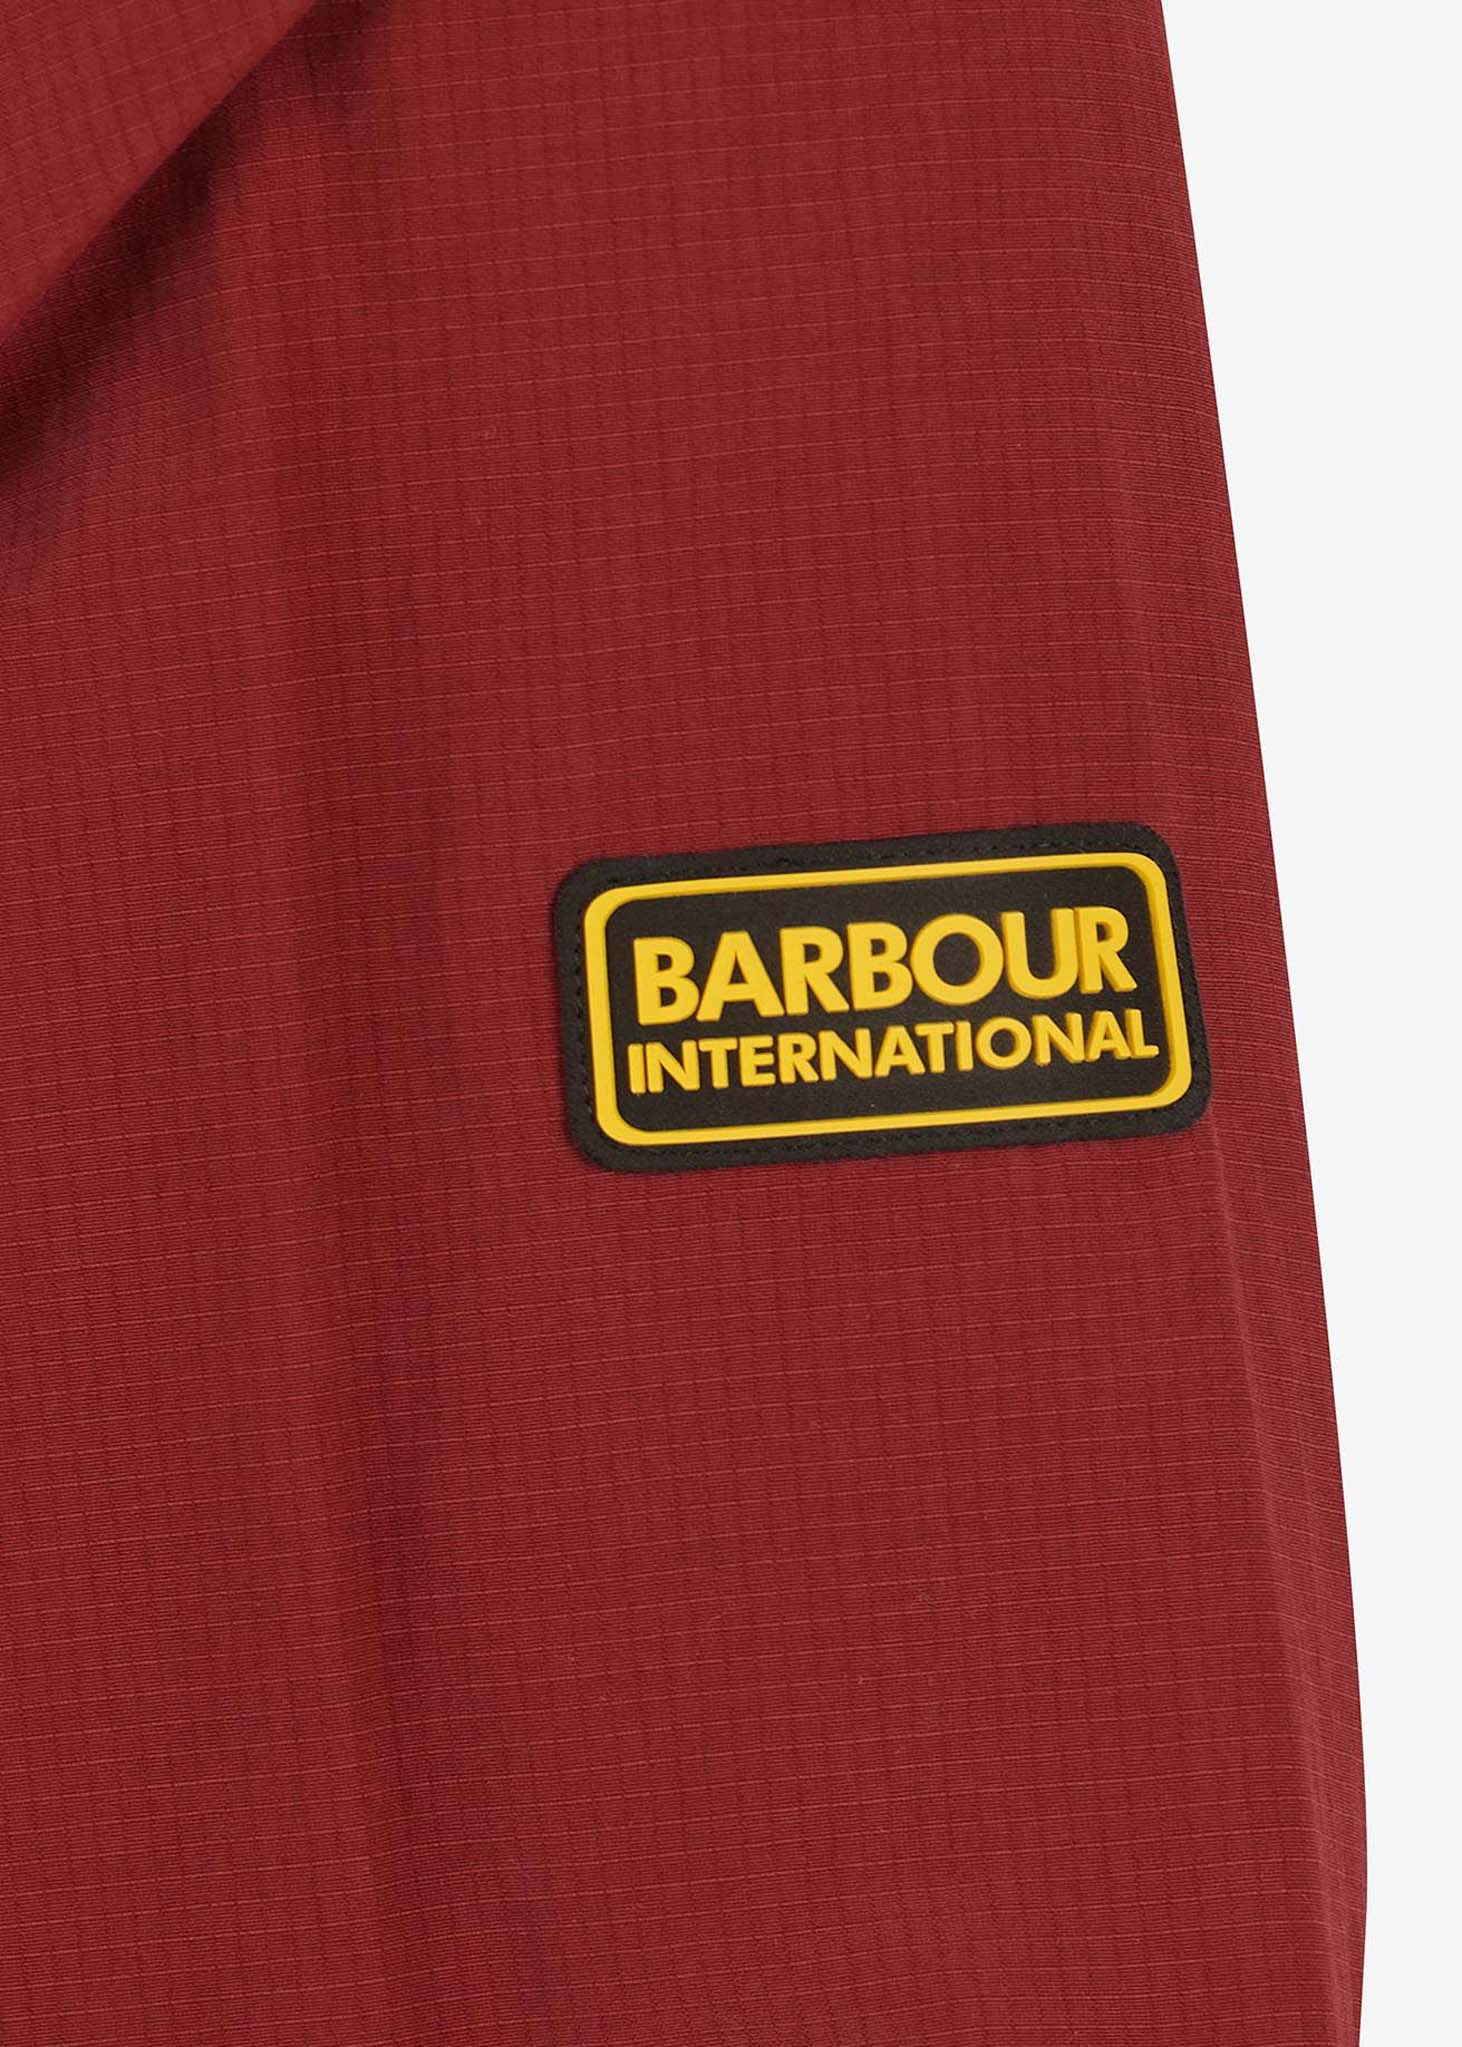 Barbour International overhead jacket wine red